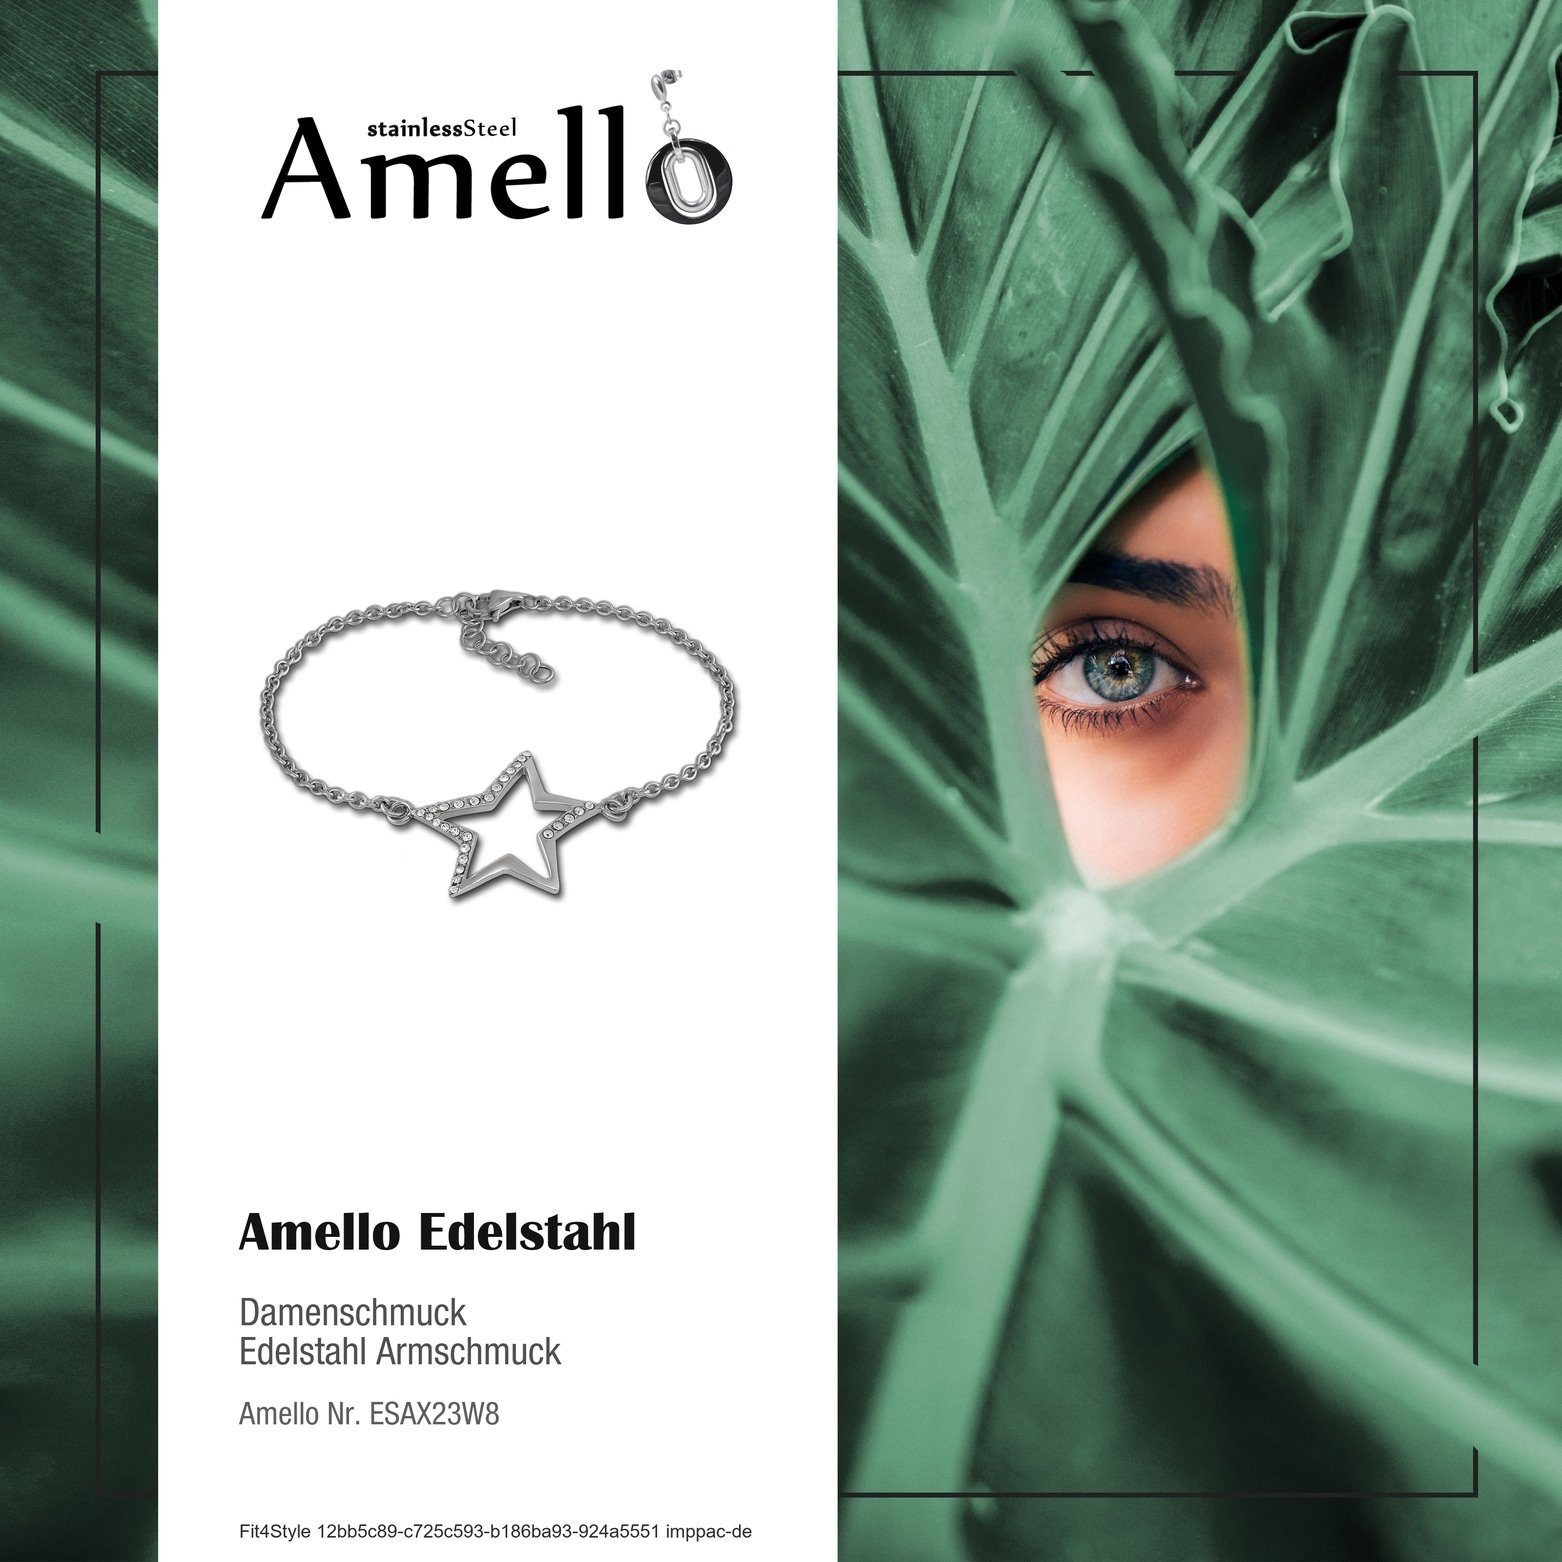 Amello Edelstahlarmband Amello Stern (Armband), Damen Steel) Armband Armbänder für (Stainless Edelstahl Edelstahl